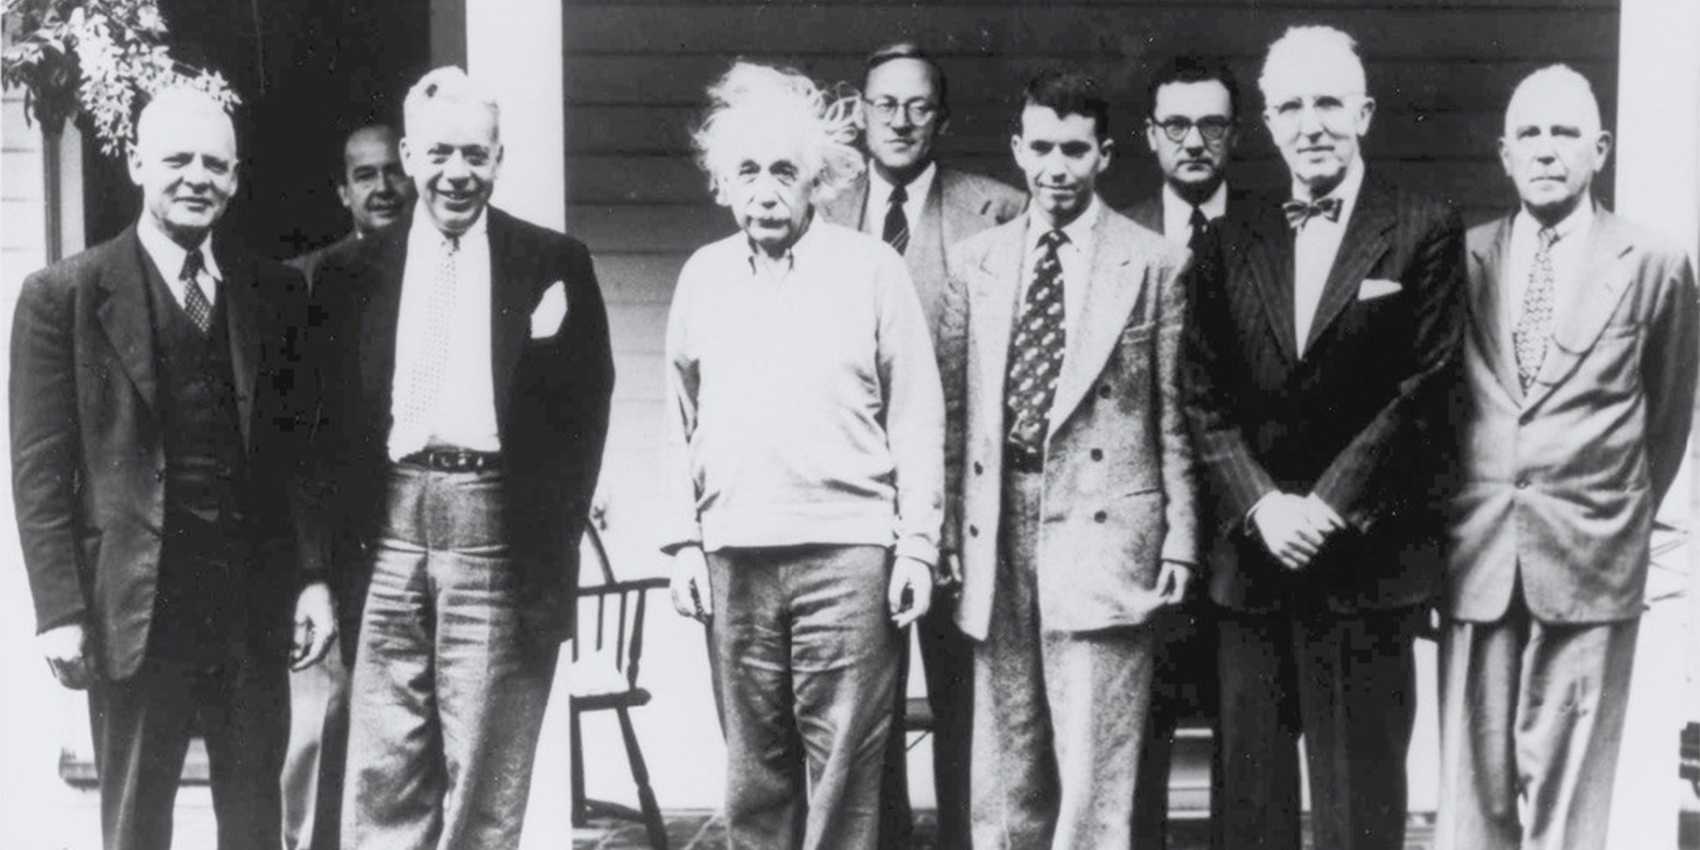 Old black and white photo of a group of men, including Albert Einstein and John von Neumann.